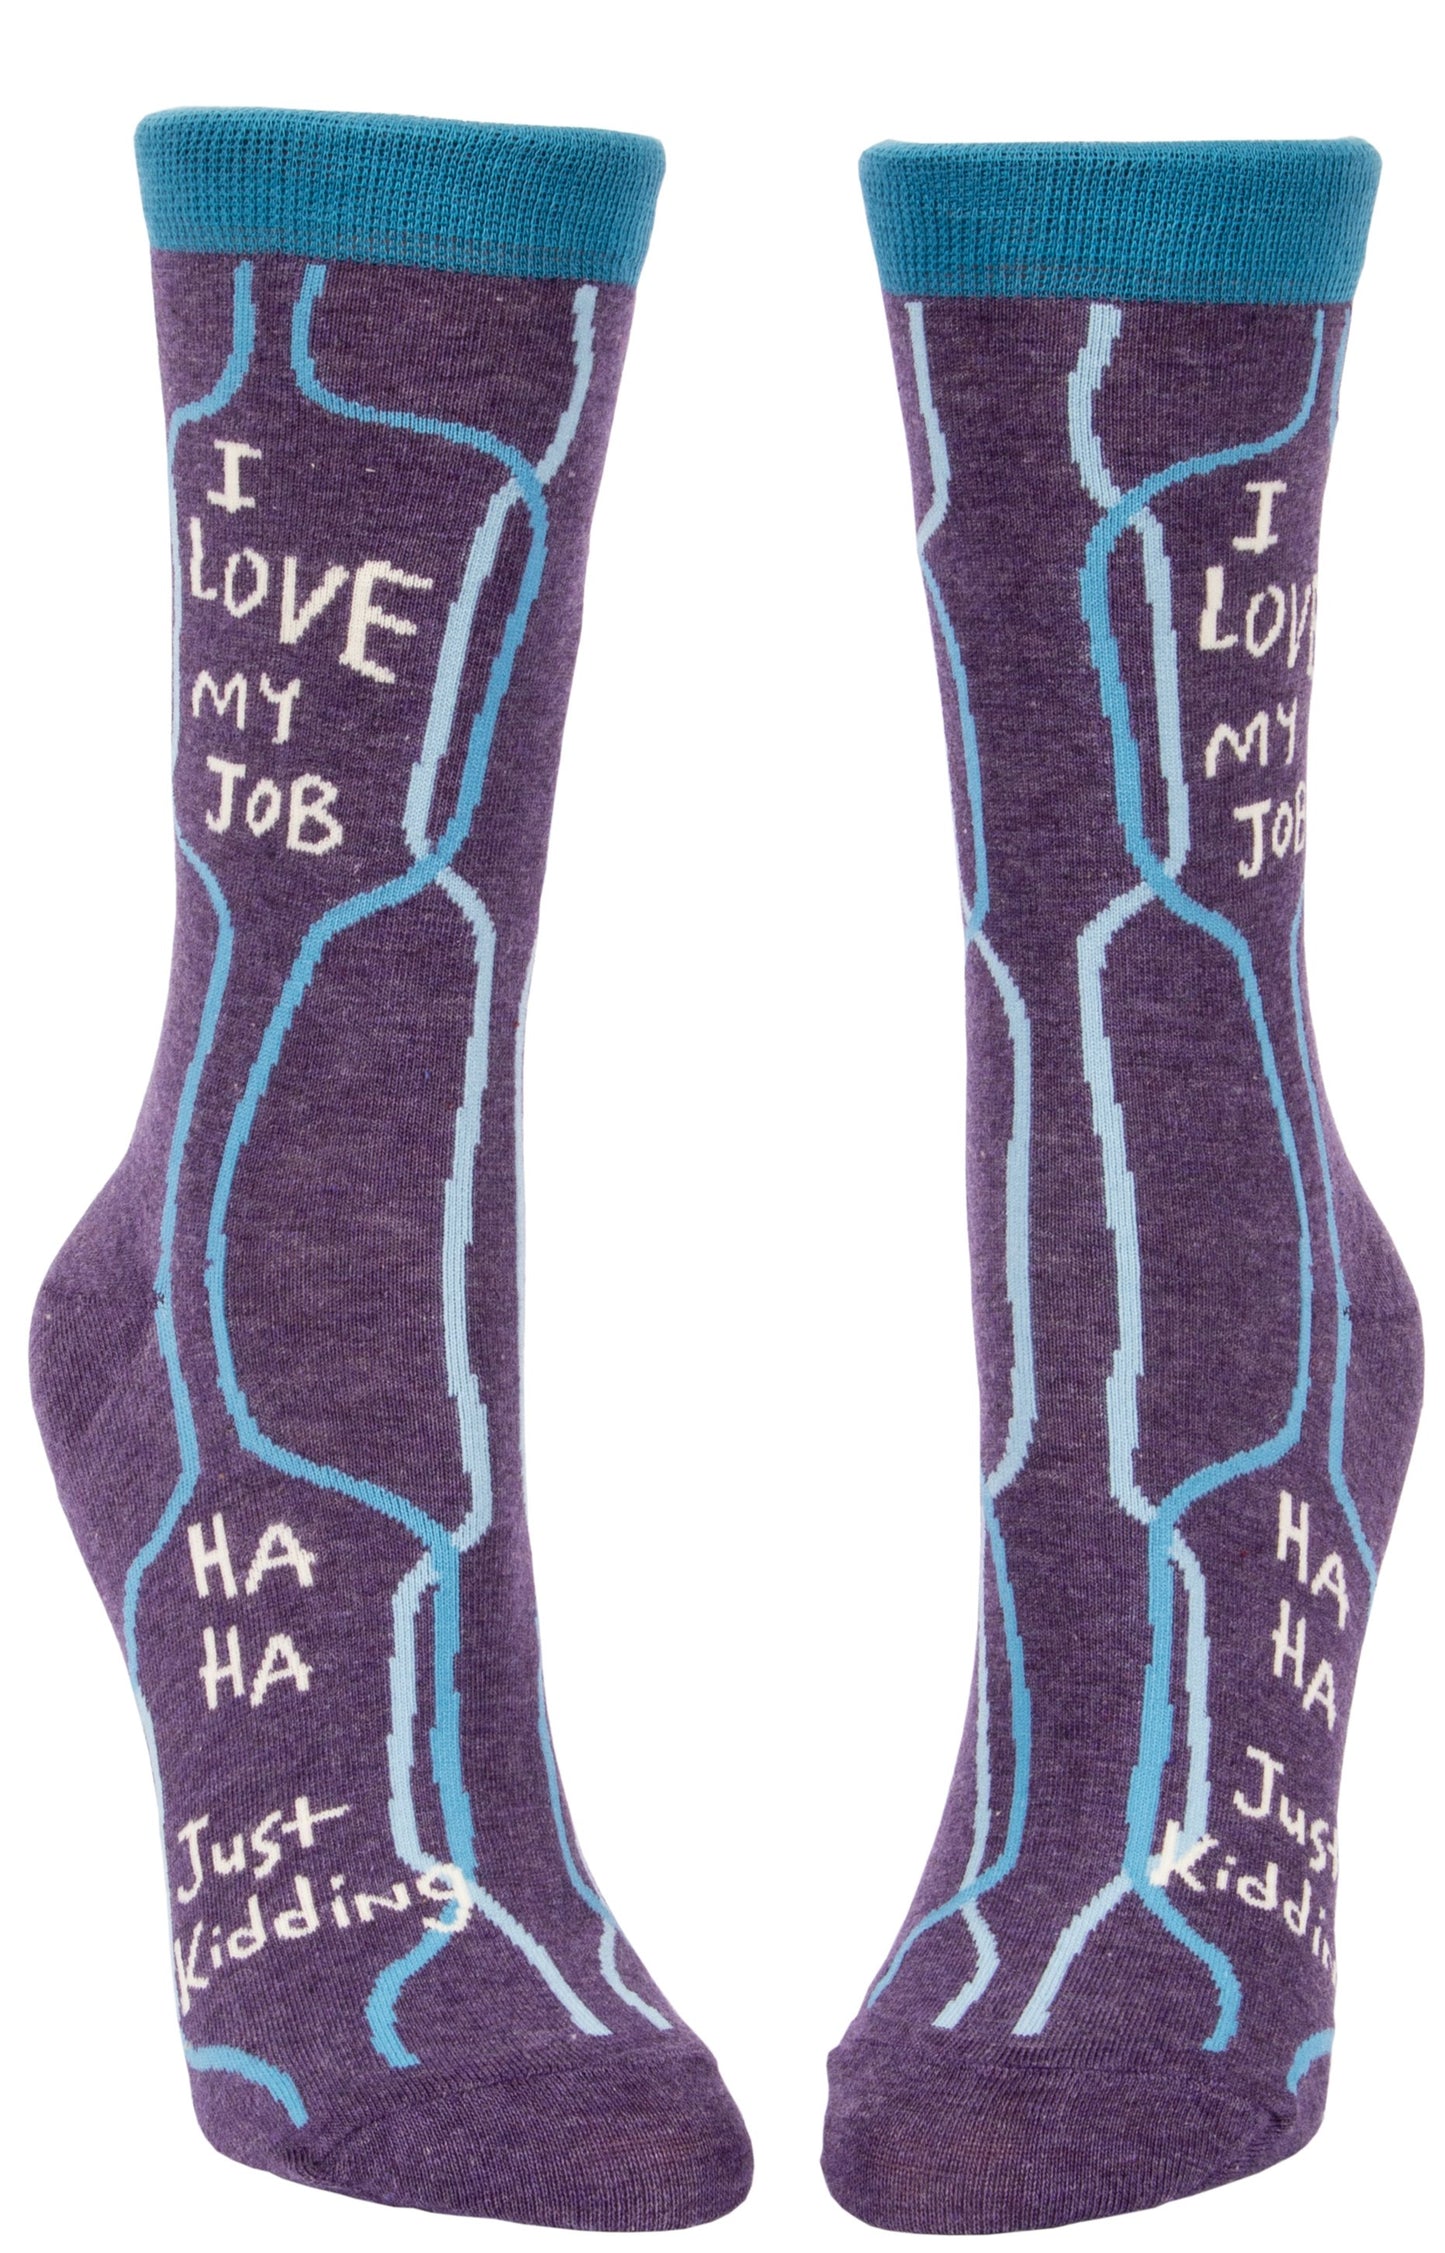 Blue Q - Women's Crew Socks - I Love My Job, Ha Ha, Just Kidding